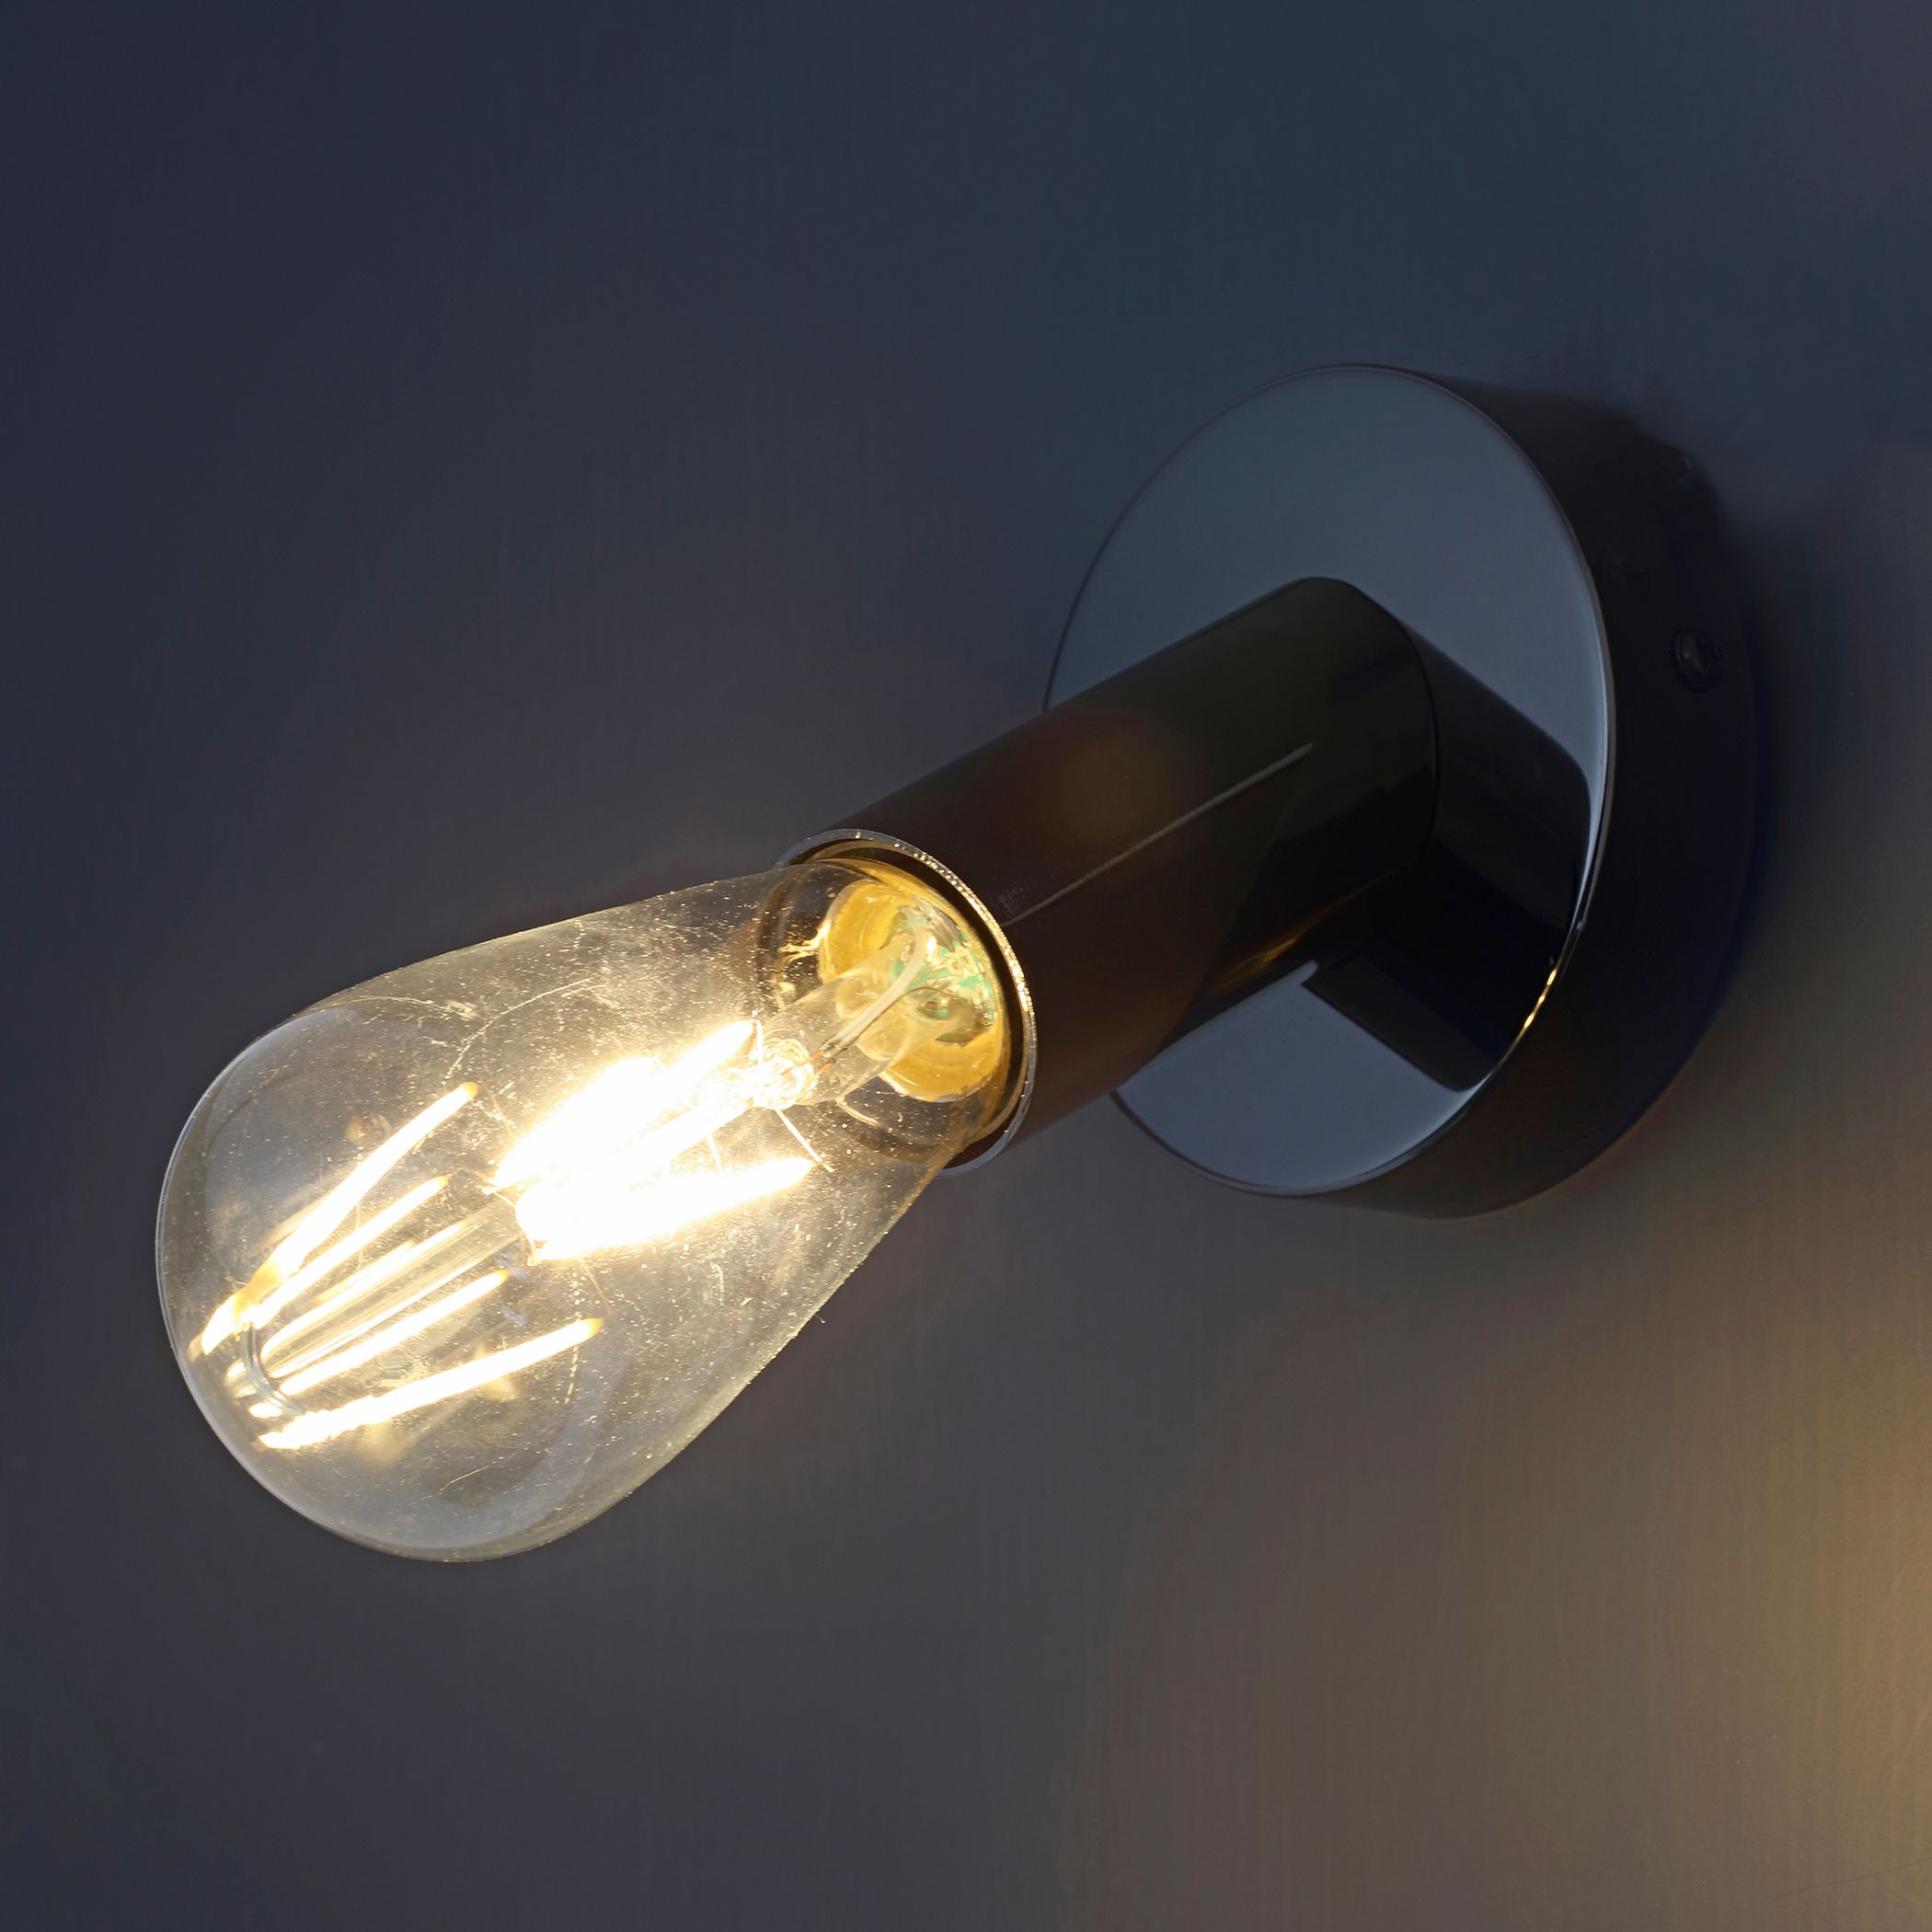 Inlight Lapetus Industrial Black nickel effect Wall light | DIY at B&Q